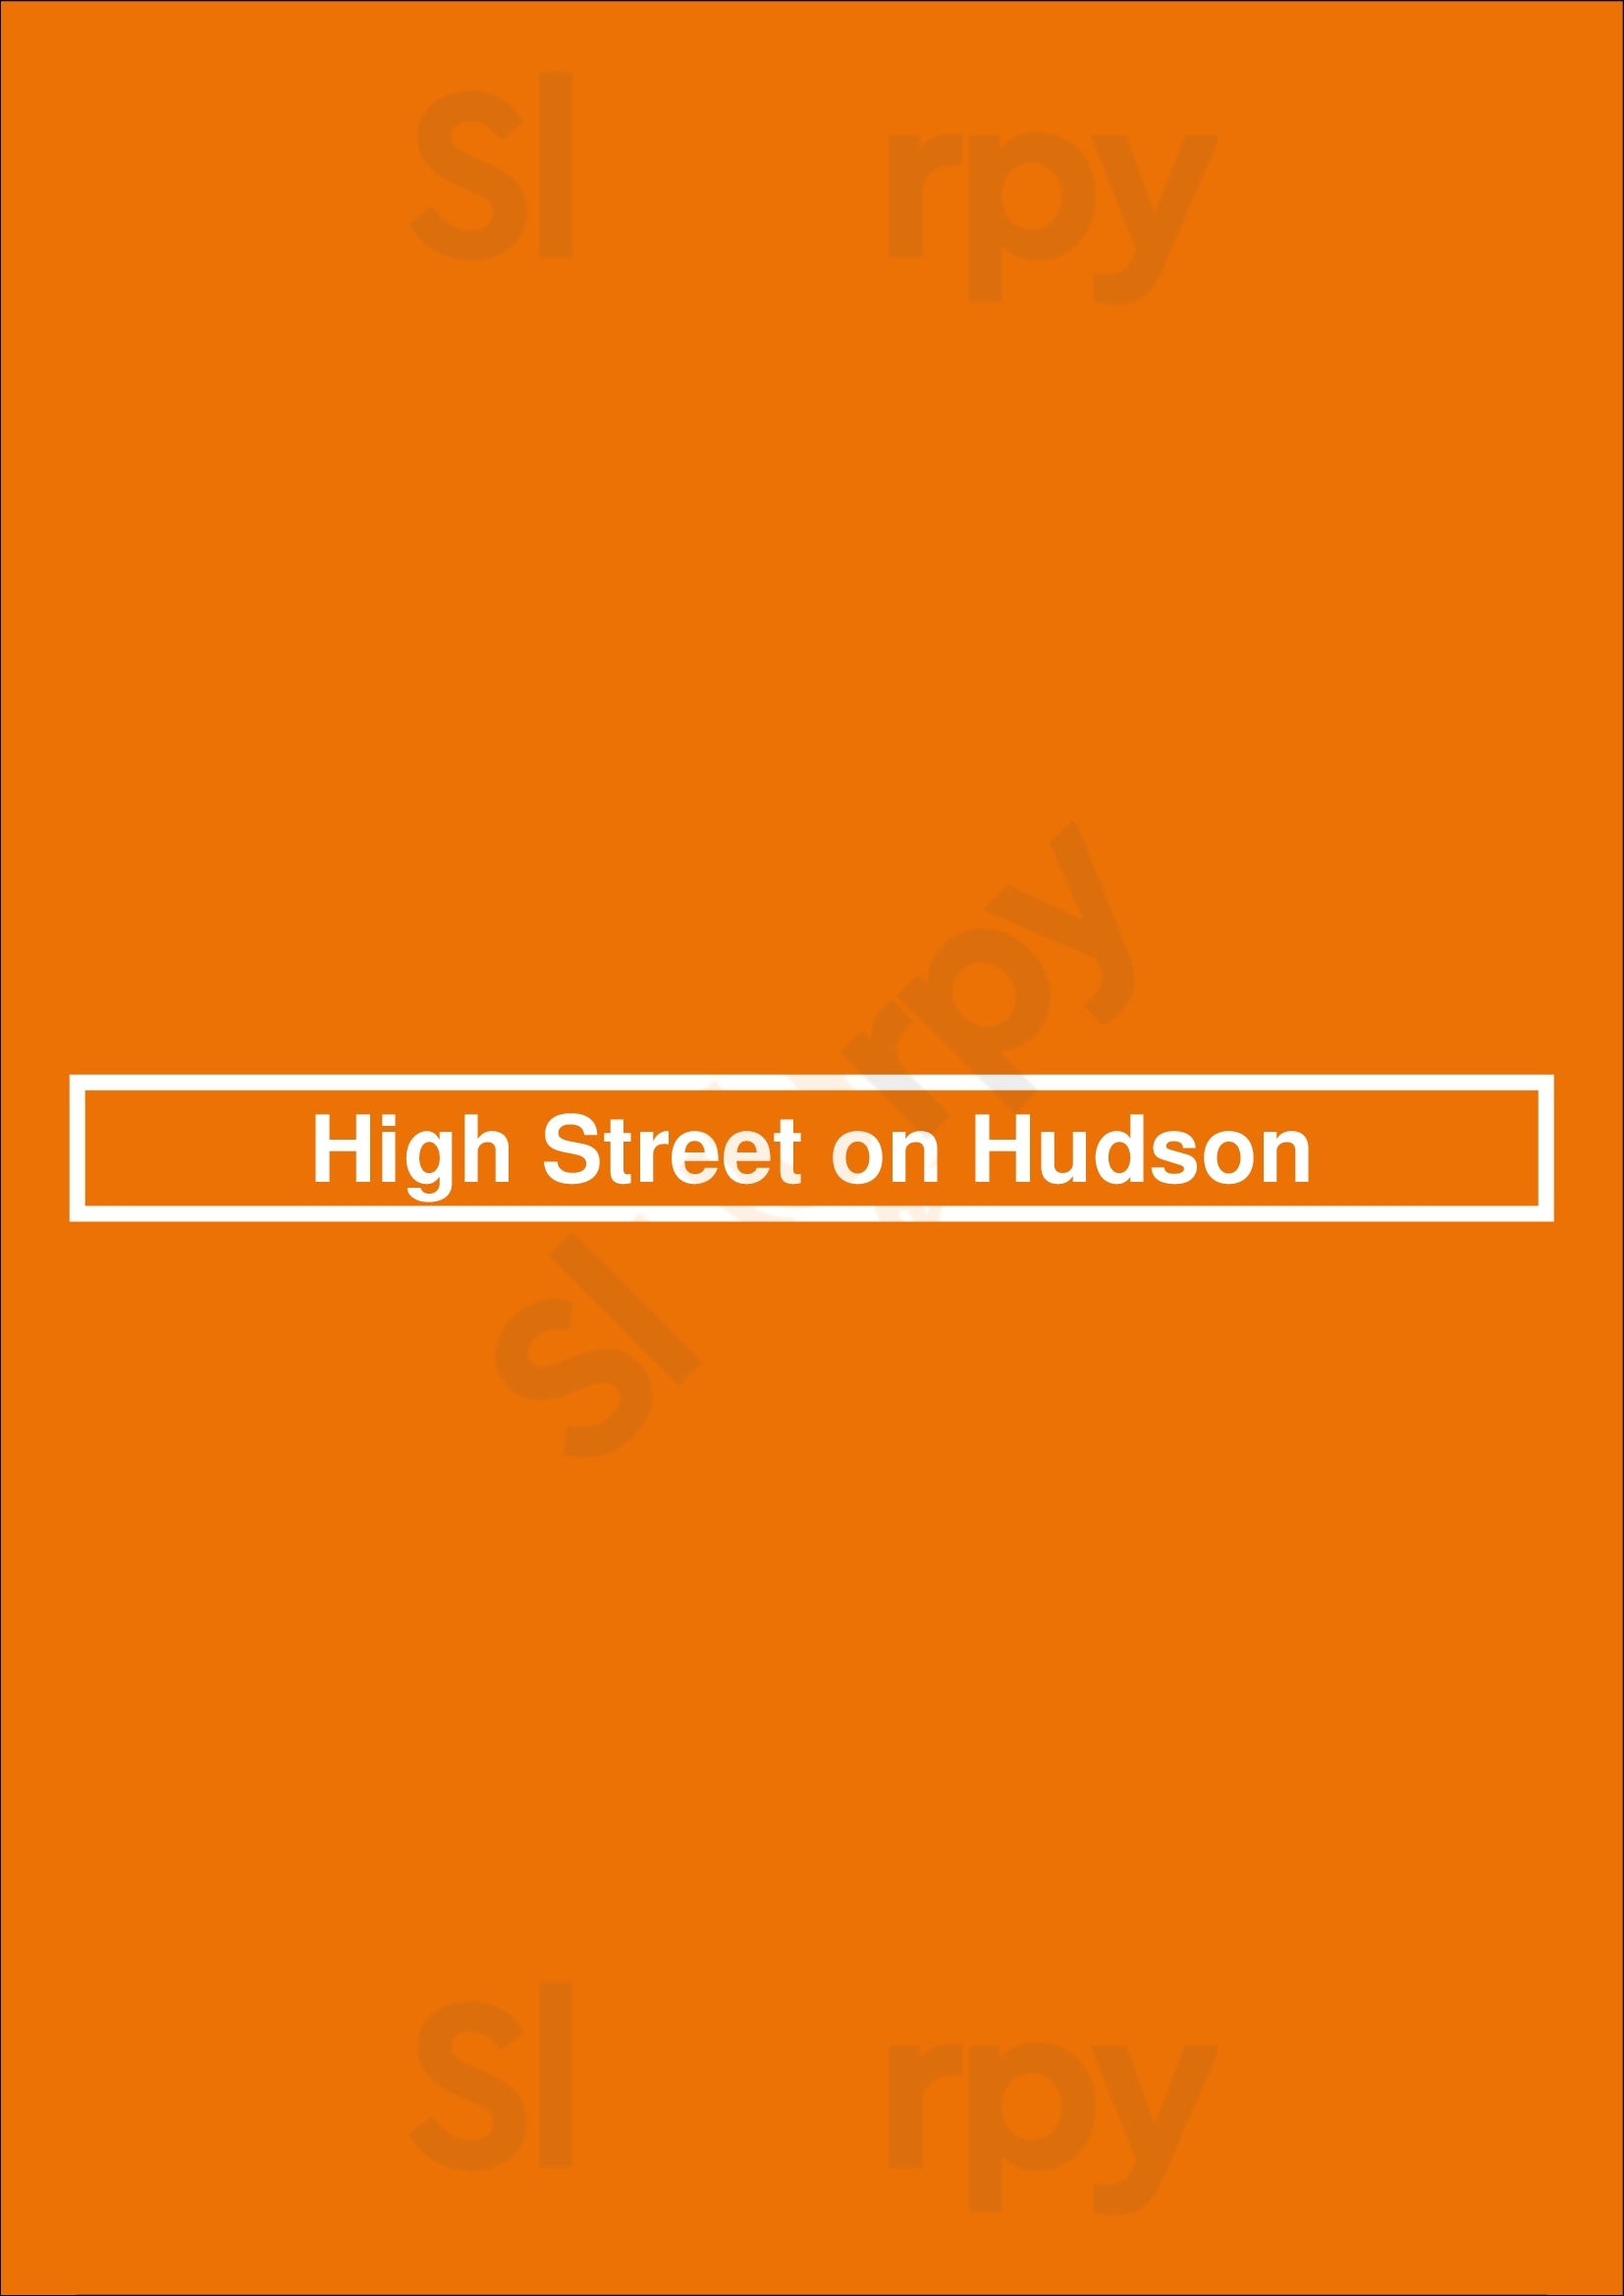 High Street On Hudson New York City Menu - 1